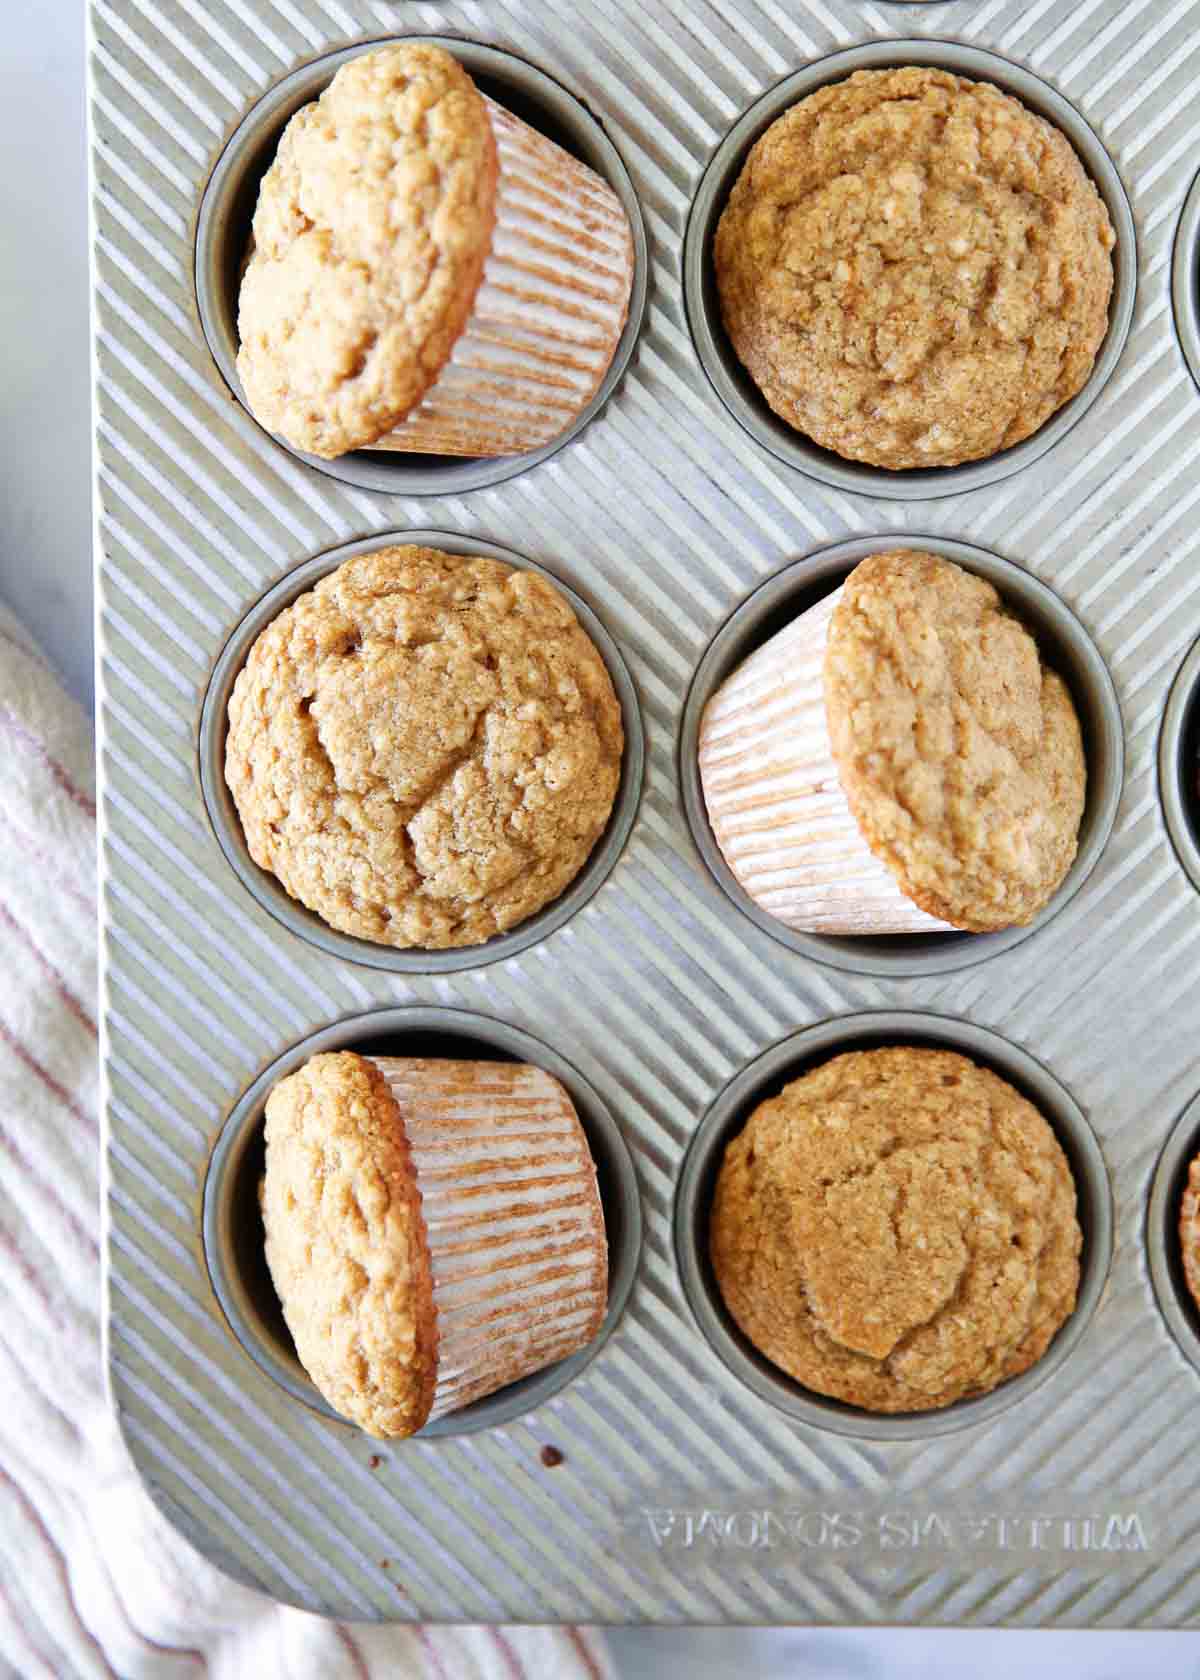 Applesauce muffins in a muffin tin.